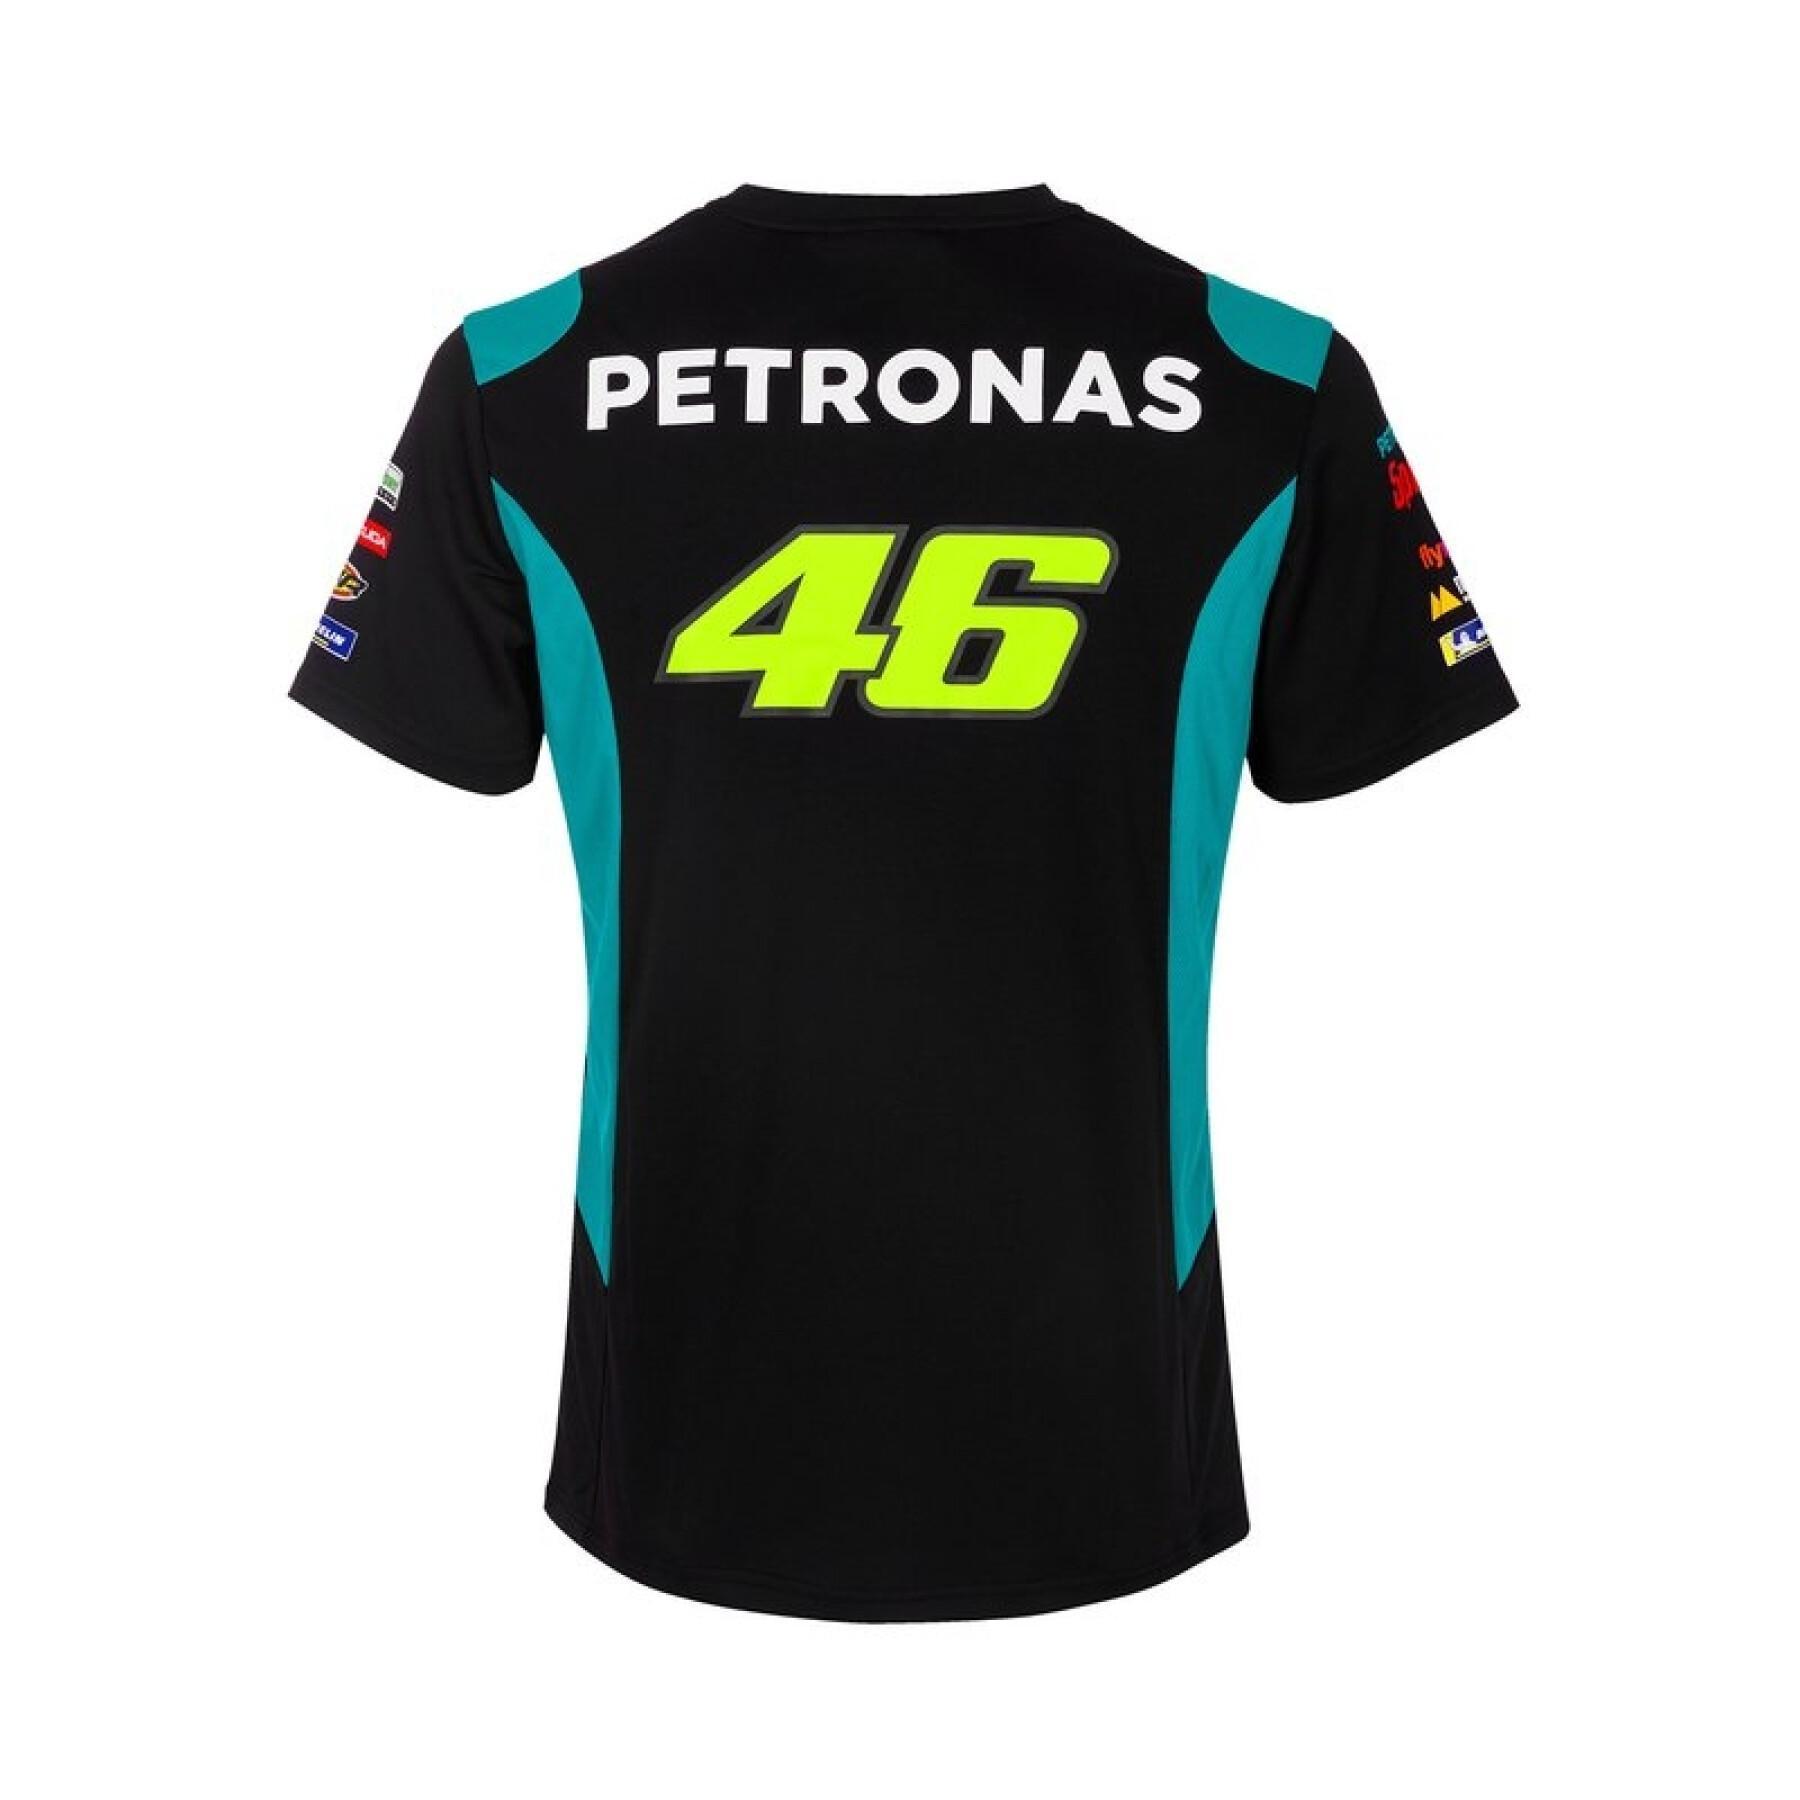 Camiseta VRl46 Petronas morbidelli